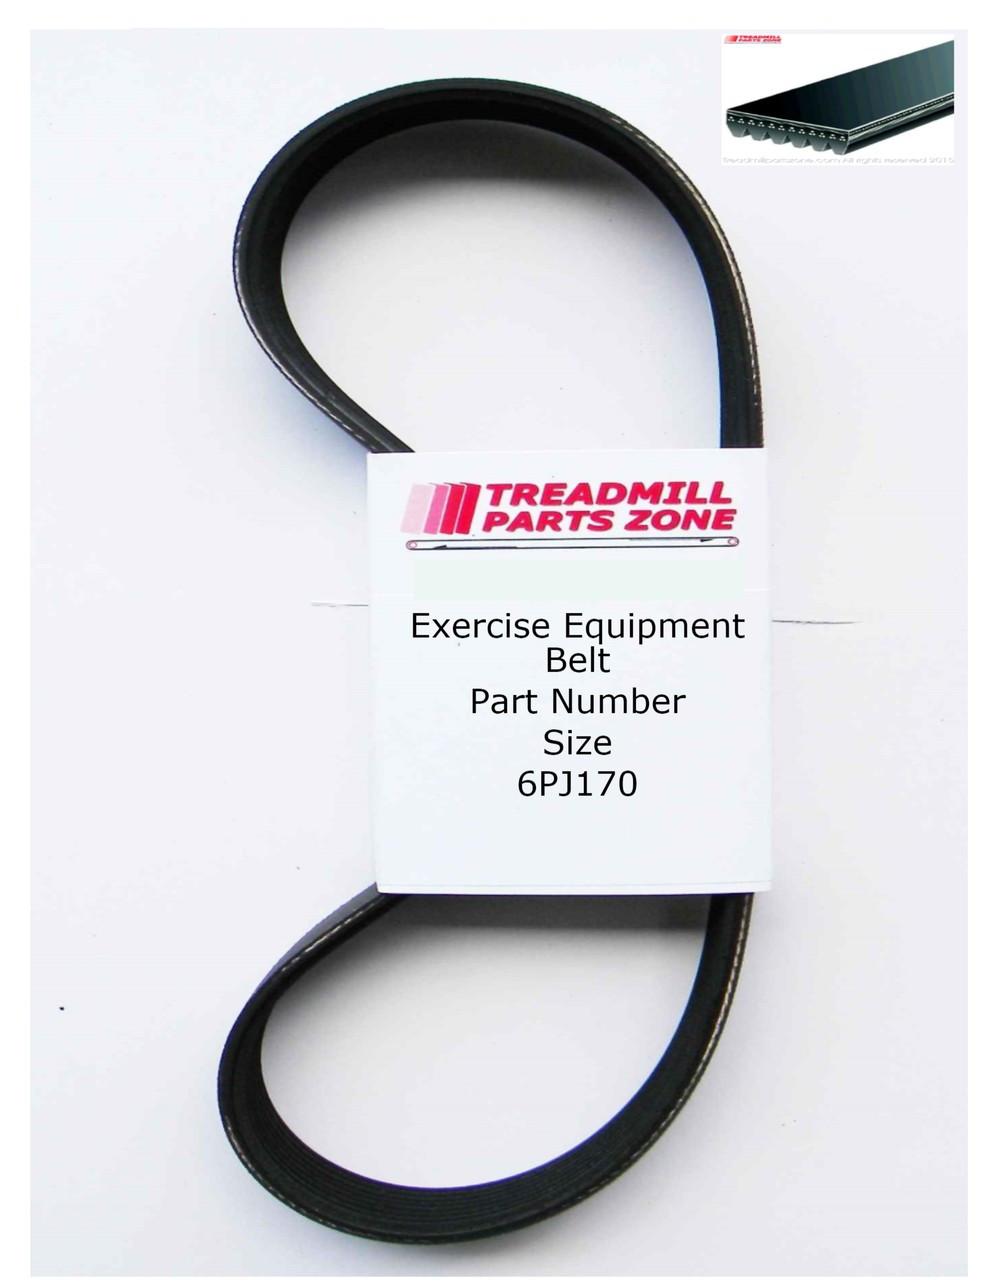 Exercise Equipment Drive Belt Part Number 6PJ170